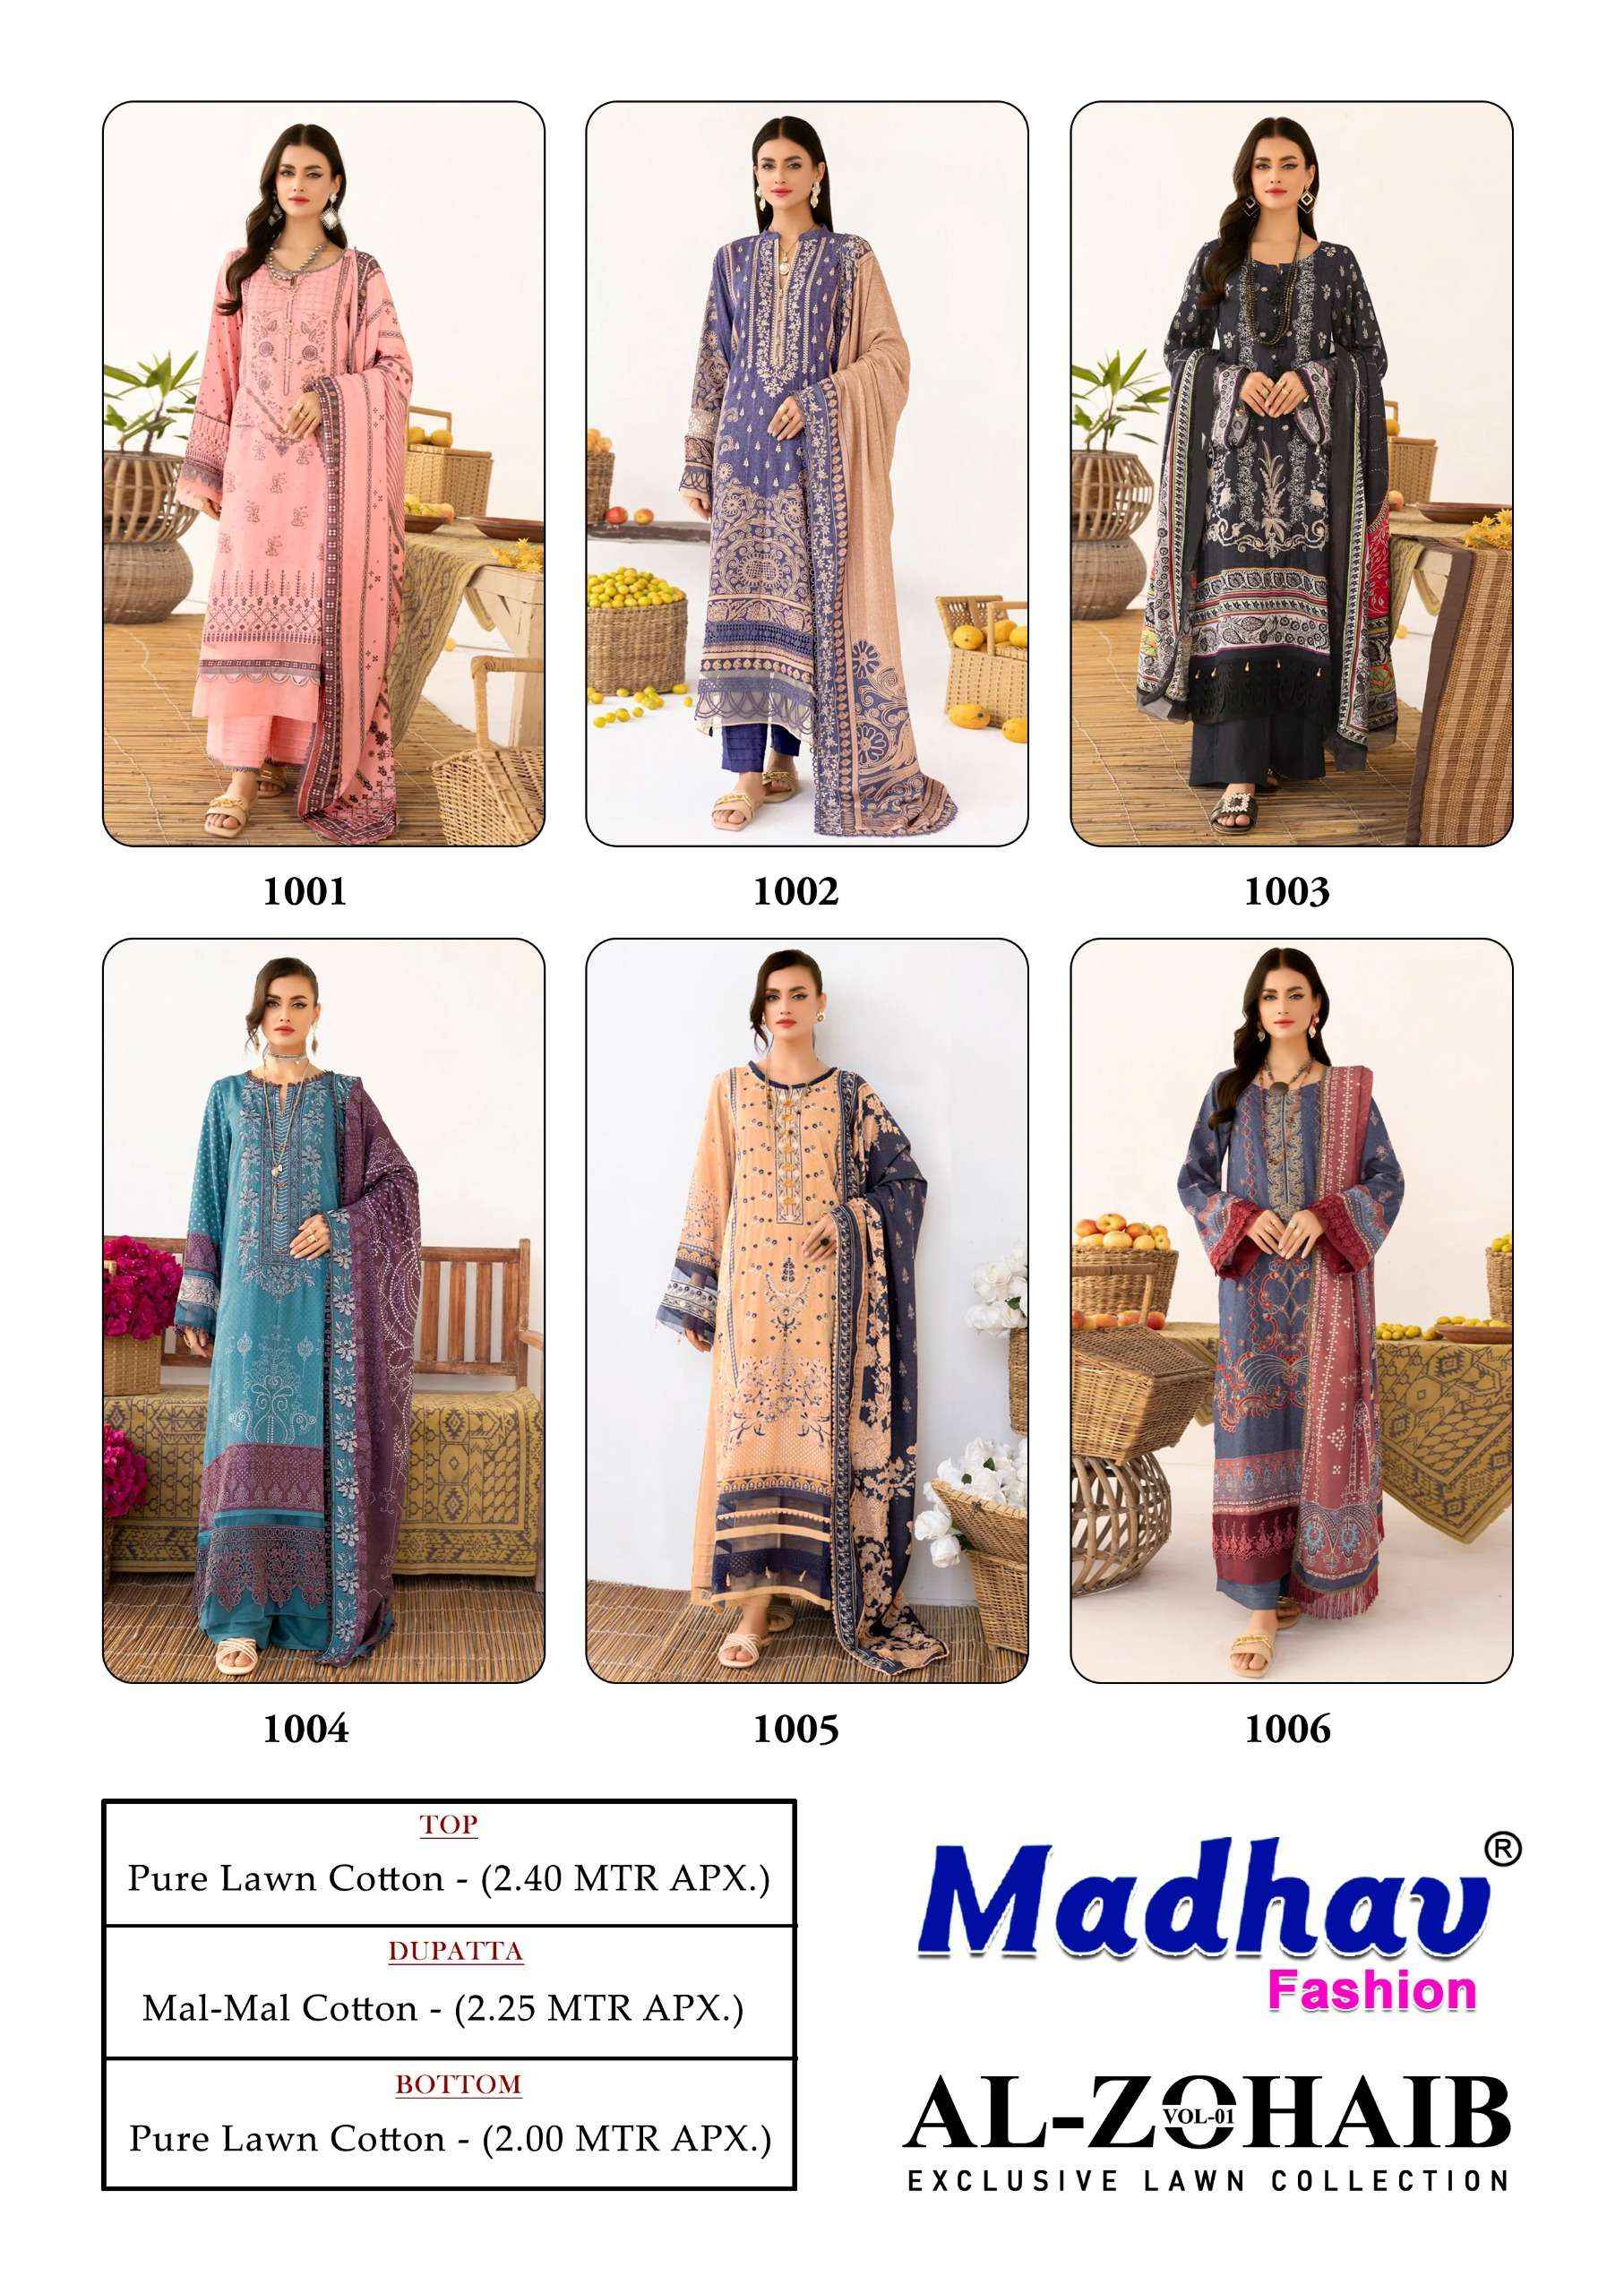 Madhav Fashion Al Zohaib Vol 1 Lawn Cotton Dress Material 6 pcs Catalogue